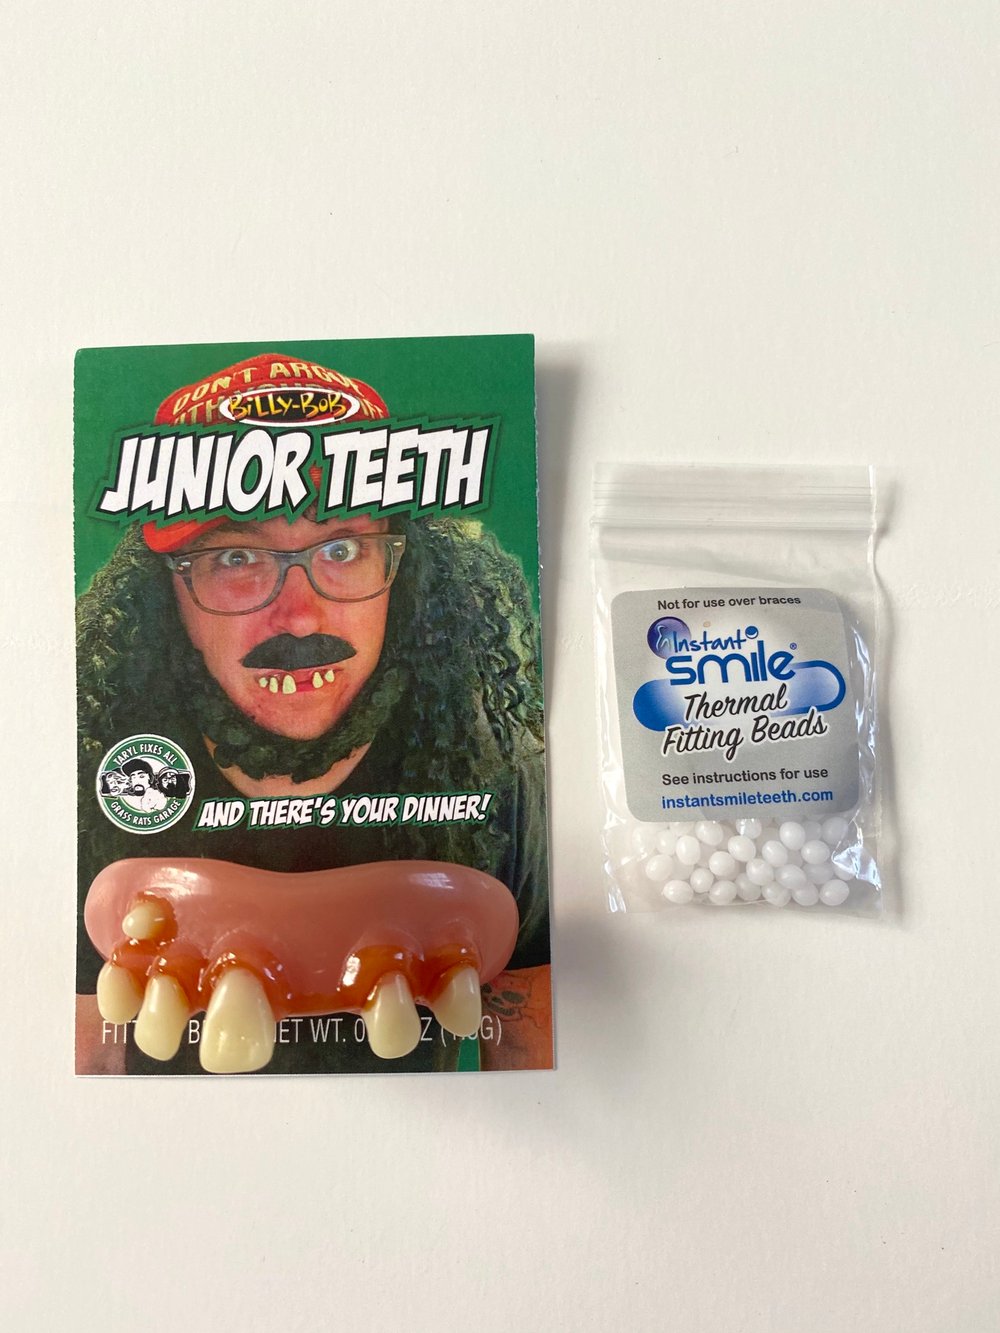 Taryl and Junior Teeth!! (High Quality!)